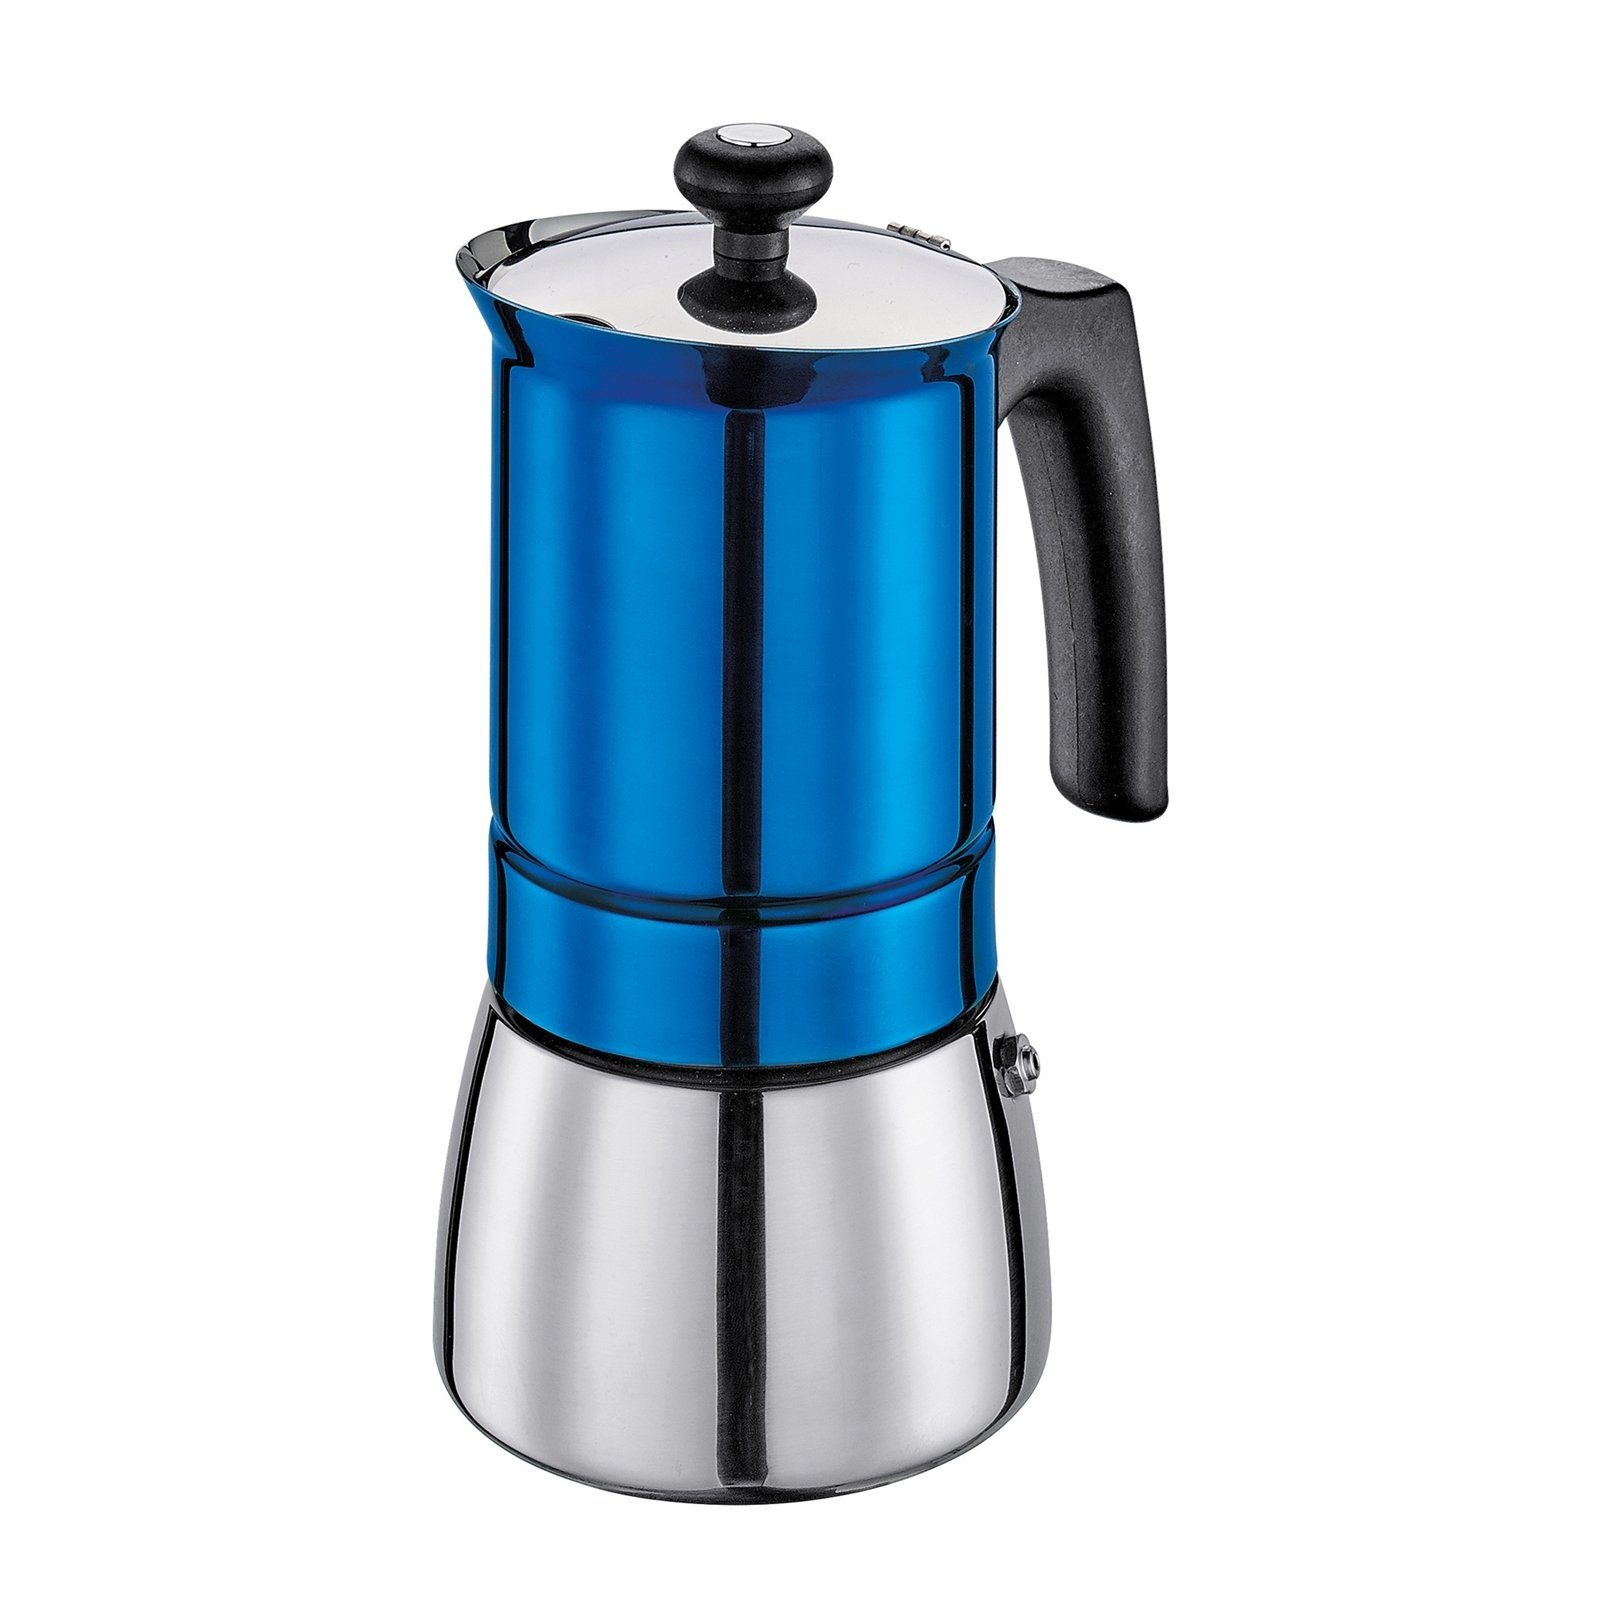 Cilio Espressokocher Espressokocher Induktionsgeeignet blau 6T cilio TOSCA  341454